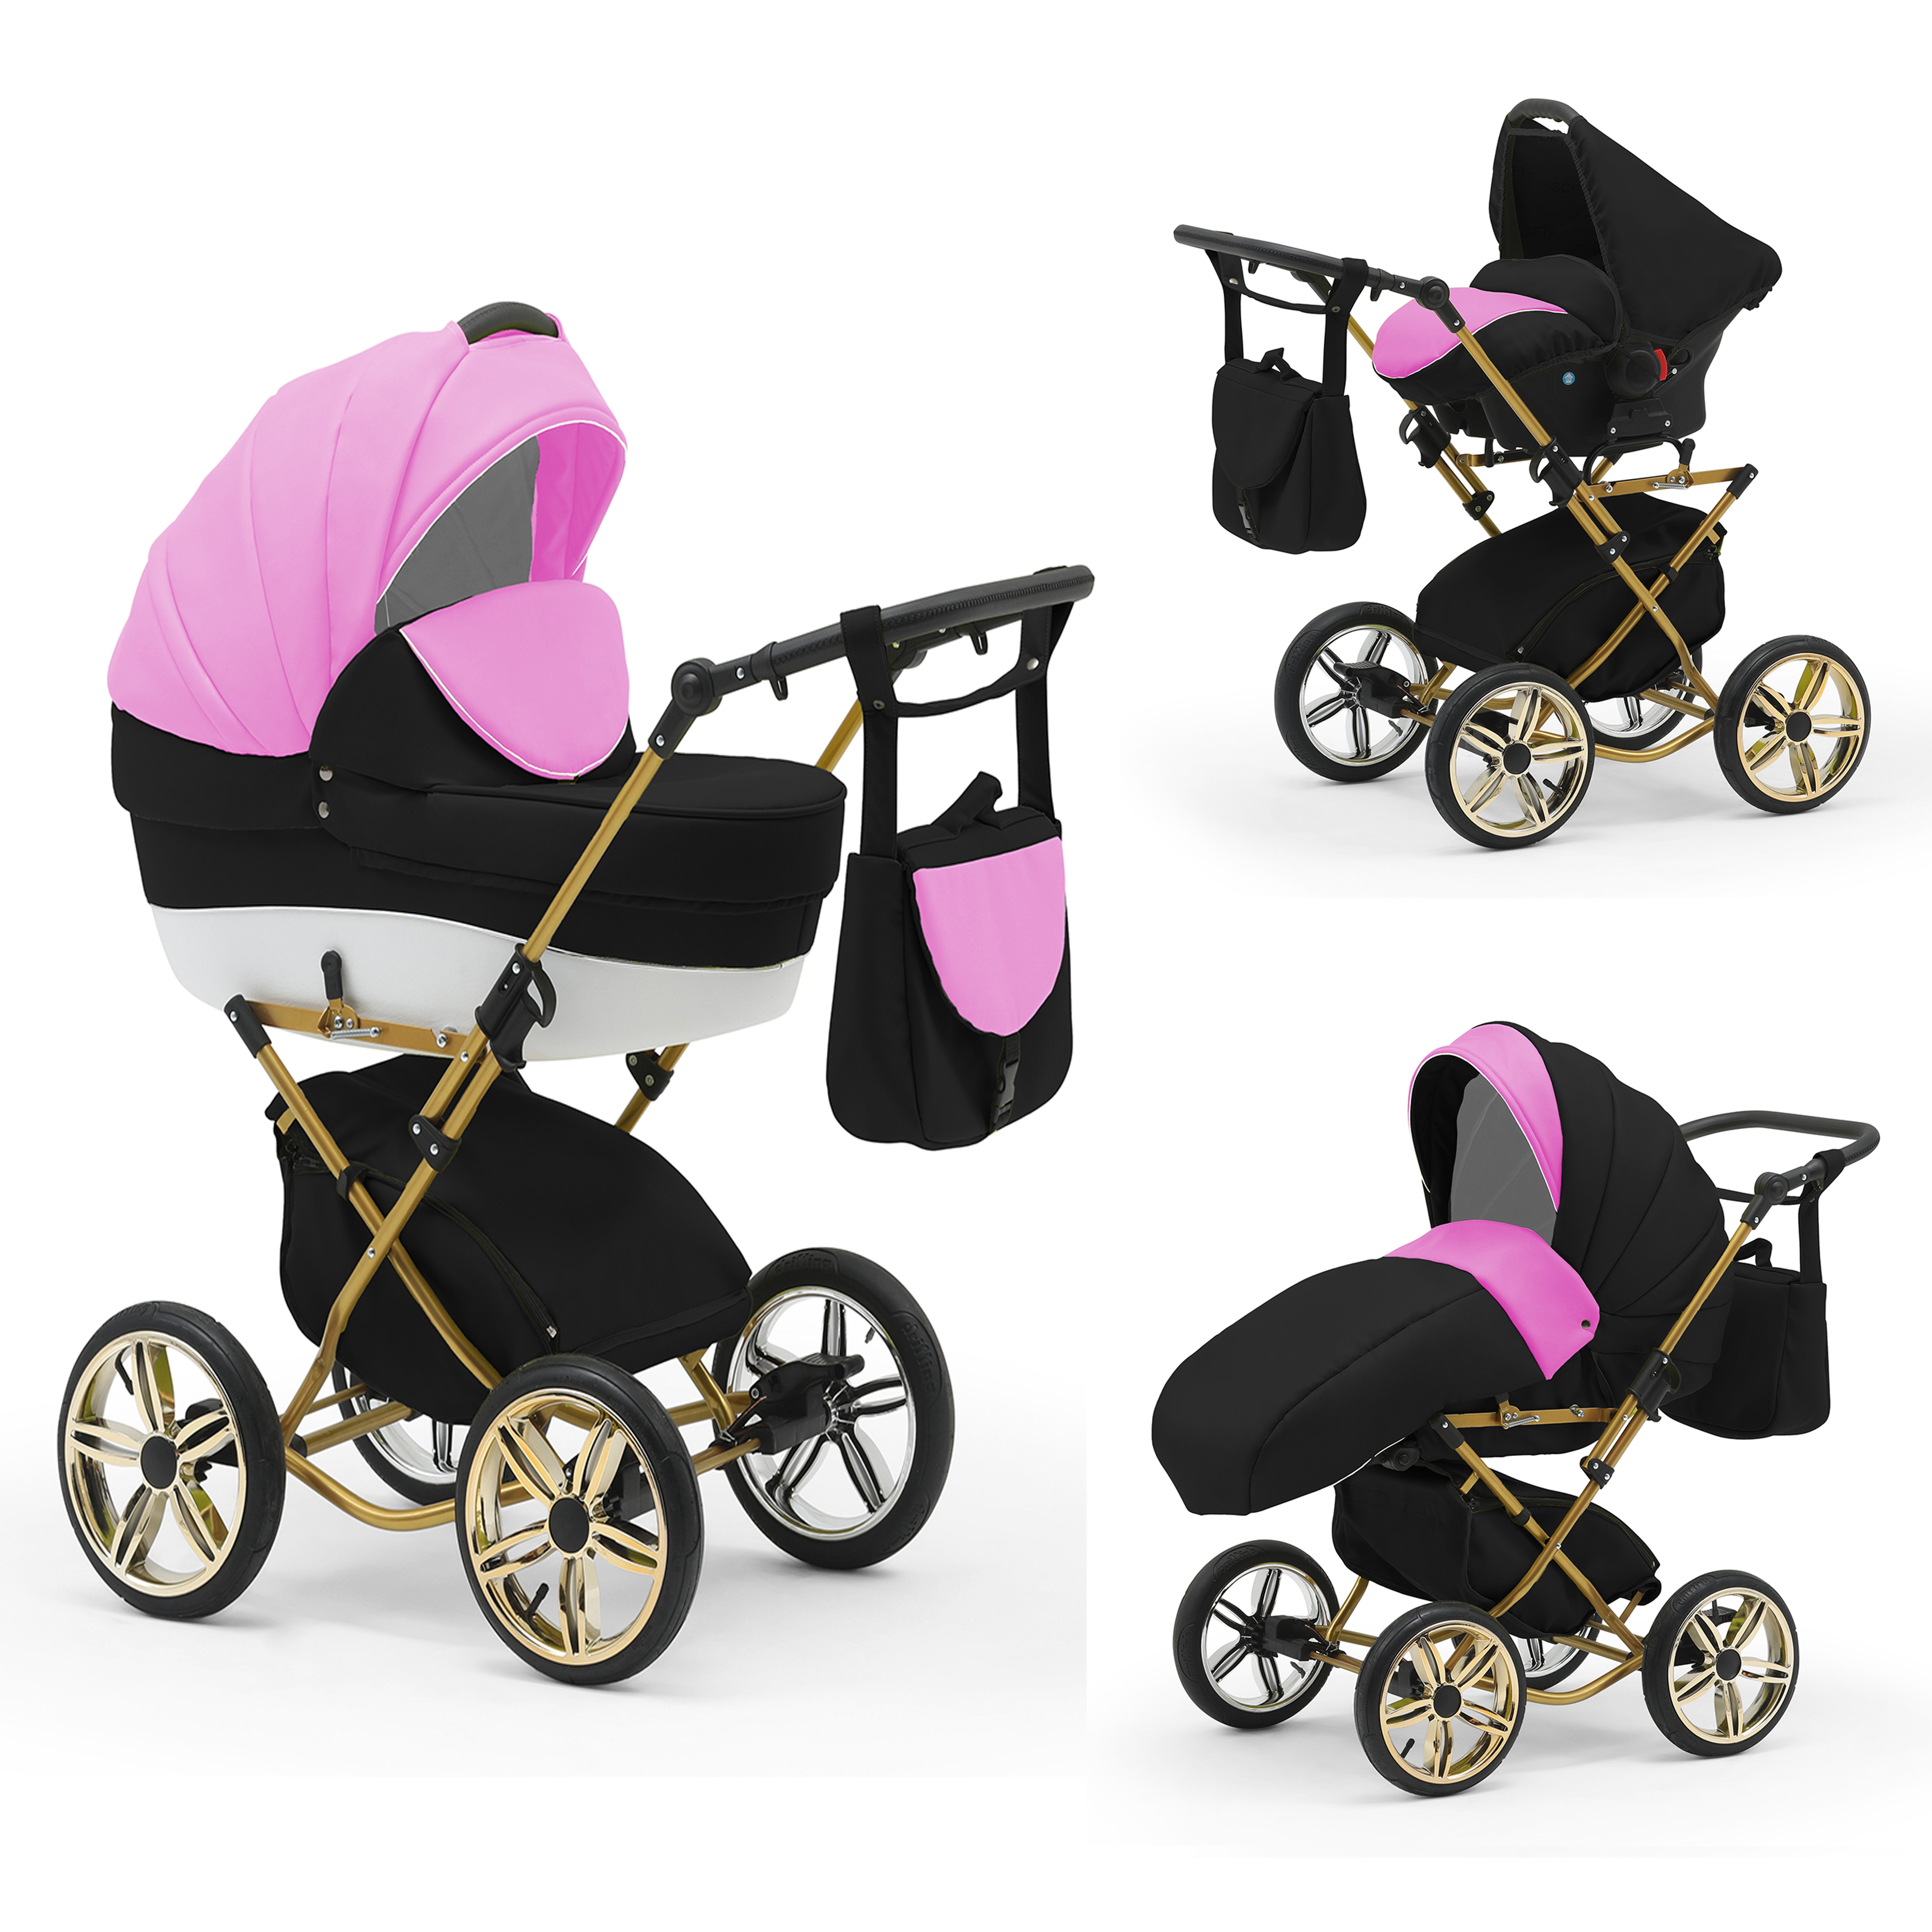 babies-on-wheels Kombi-Kinderwagen Sorento 3 in 1 inkl. Autositz - 13 Teile - in 10 Designs Pink-Schwarz-Weiß